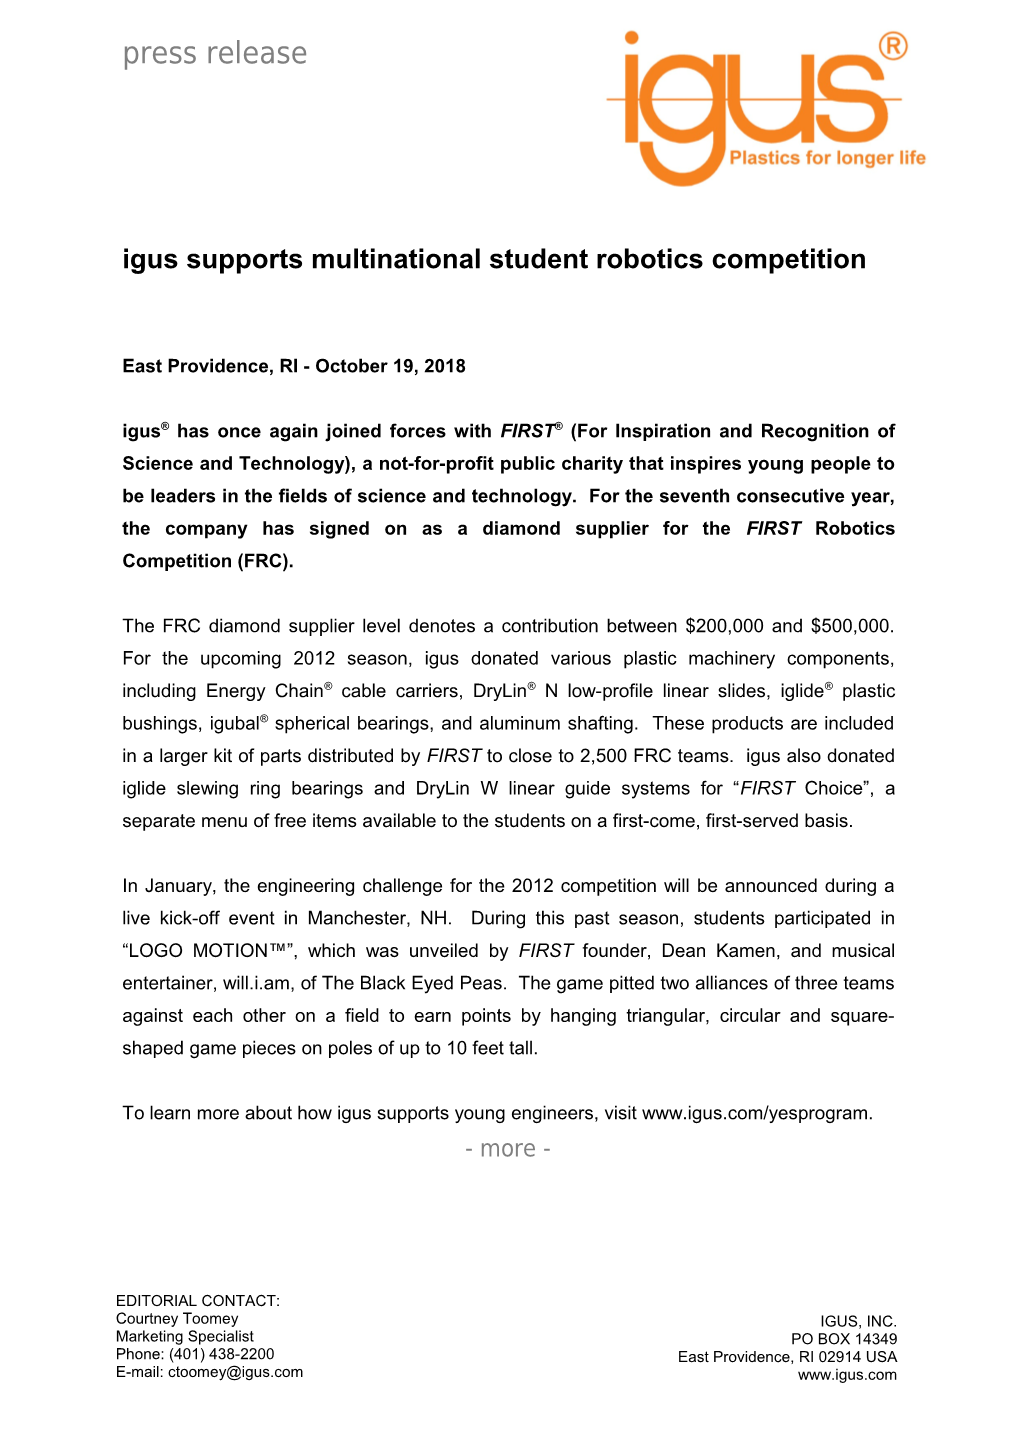 Igus Supports Multinational Student Robotics Competition